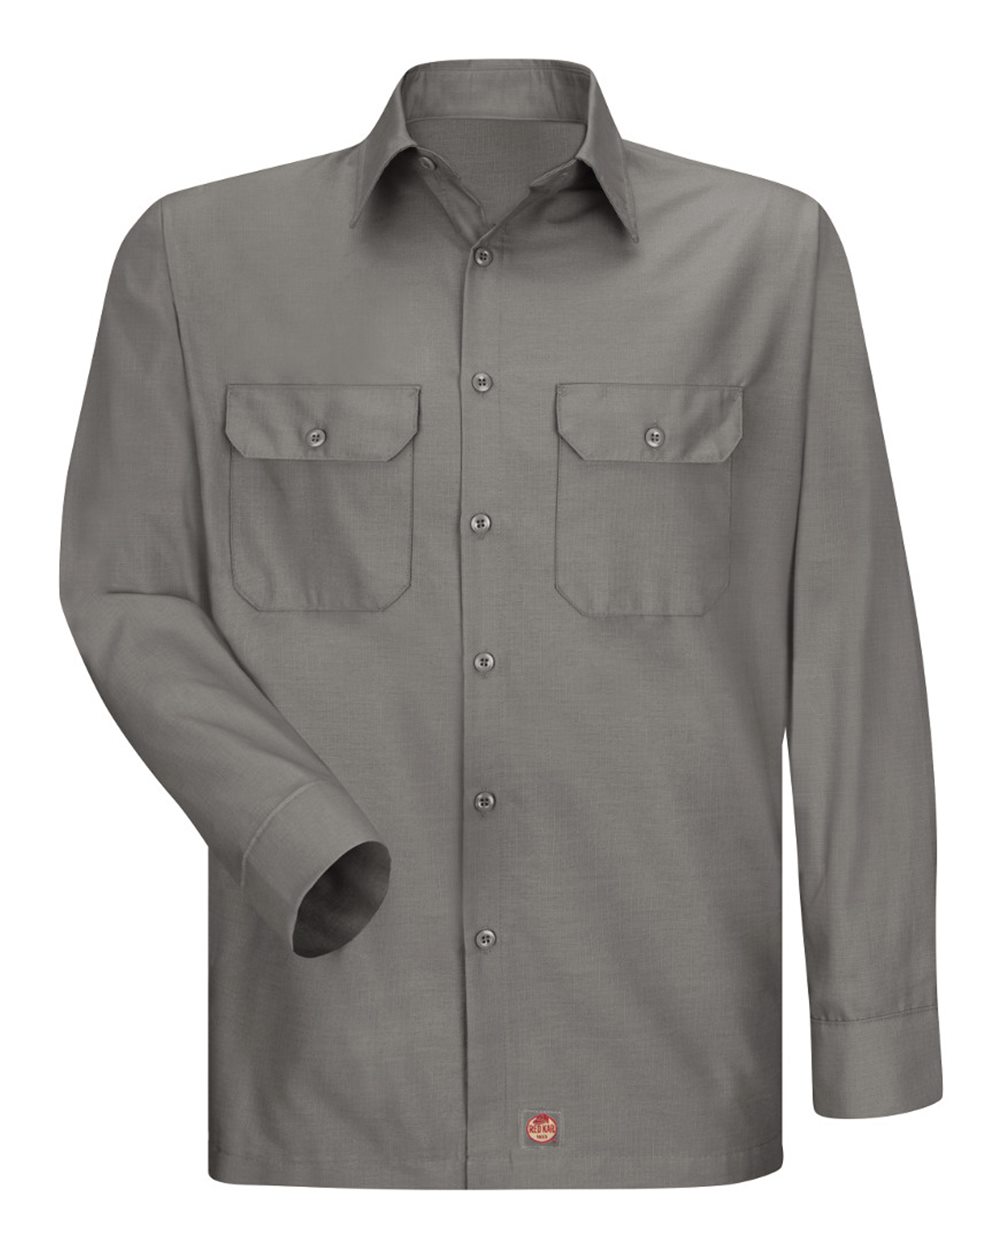 34830 Ripstop Long Sleeve Shirt Long Sizes - SY50L